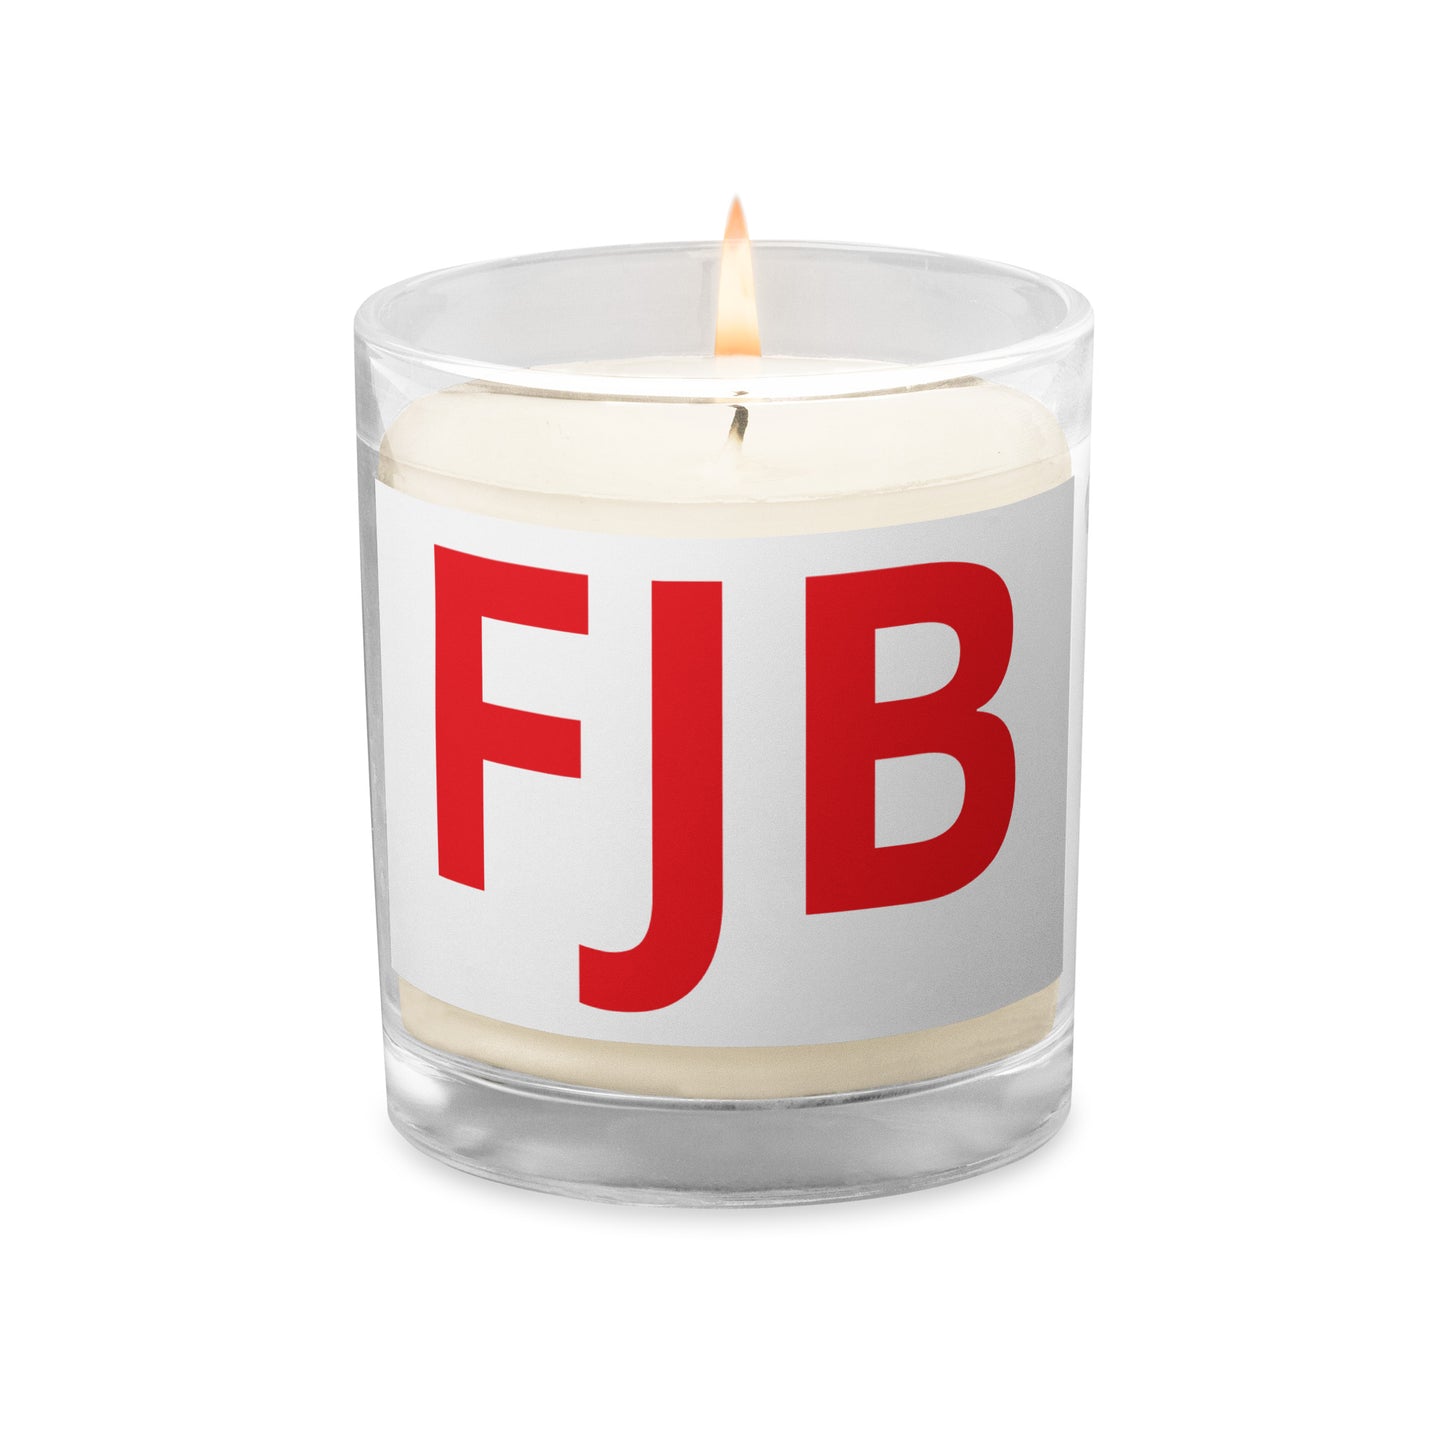 FJB Glass jar soy wax candle